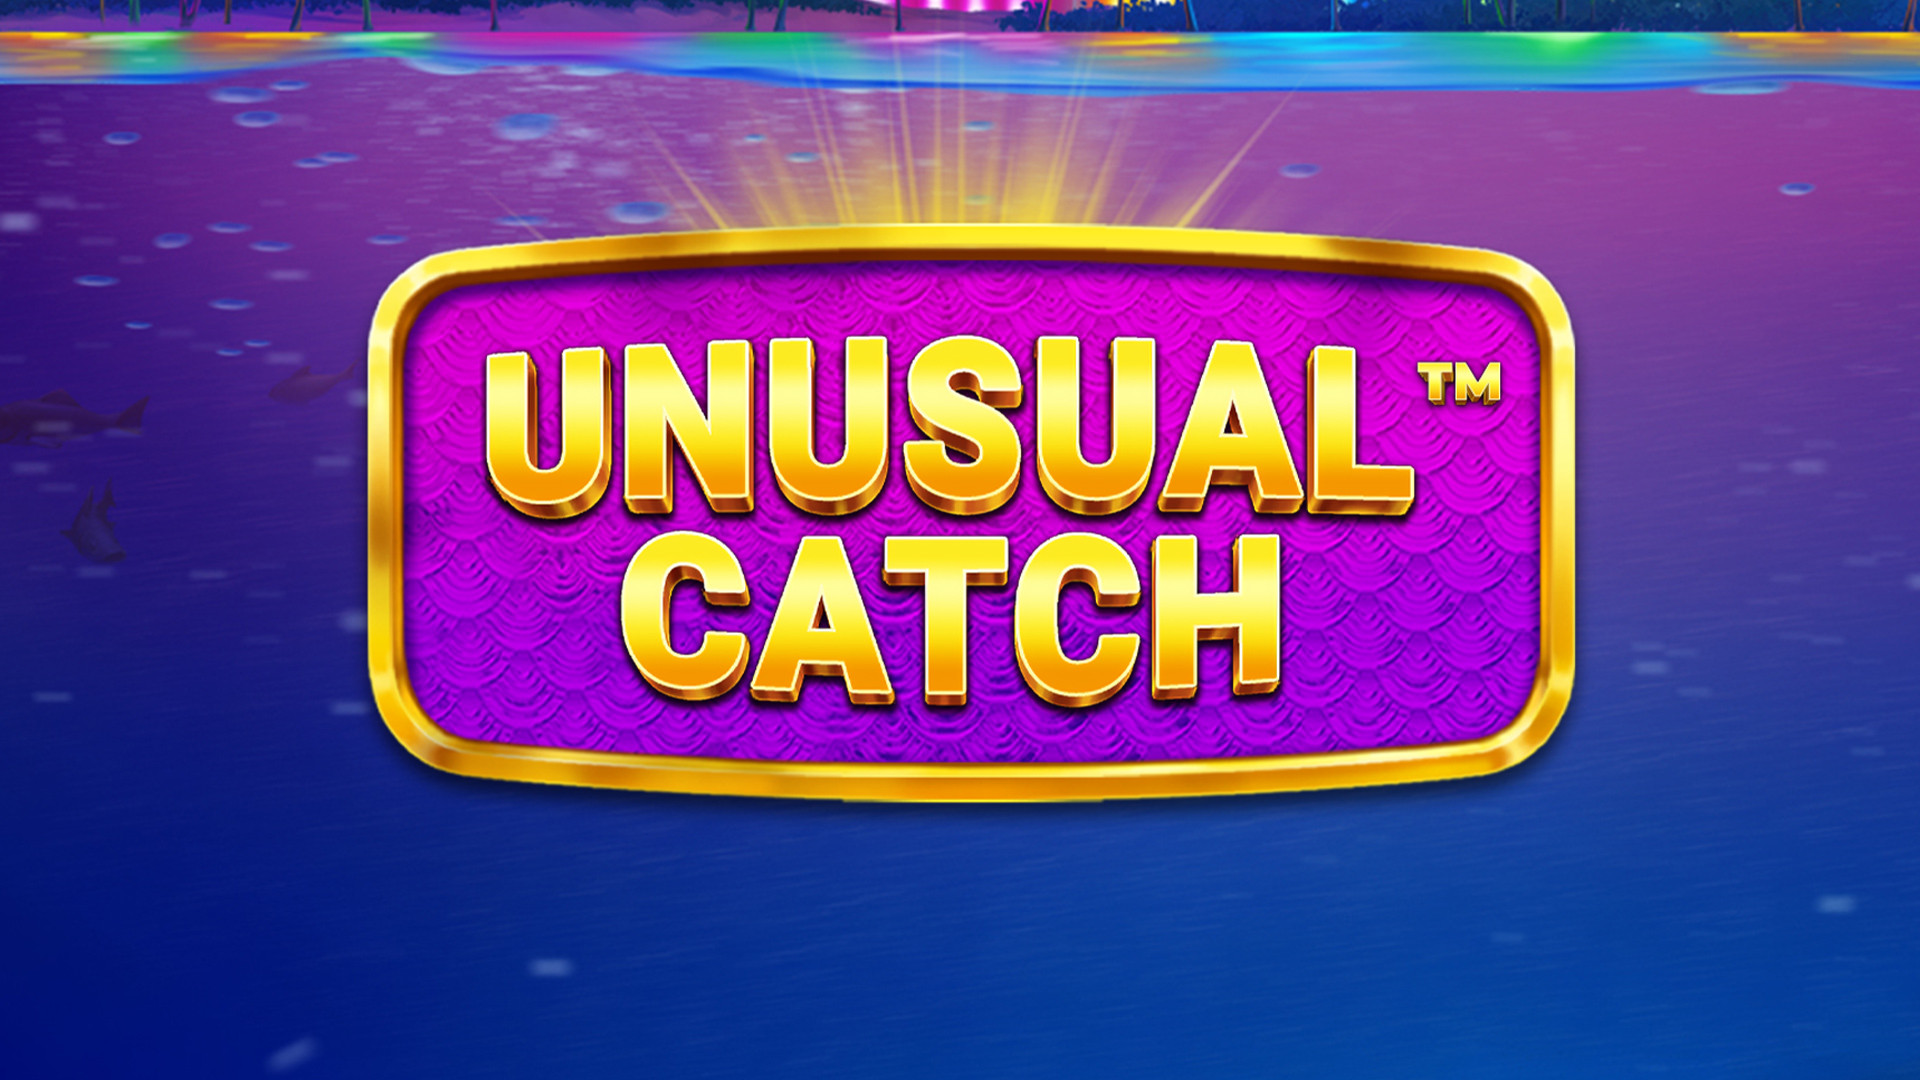 Unusual Catch